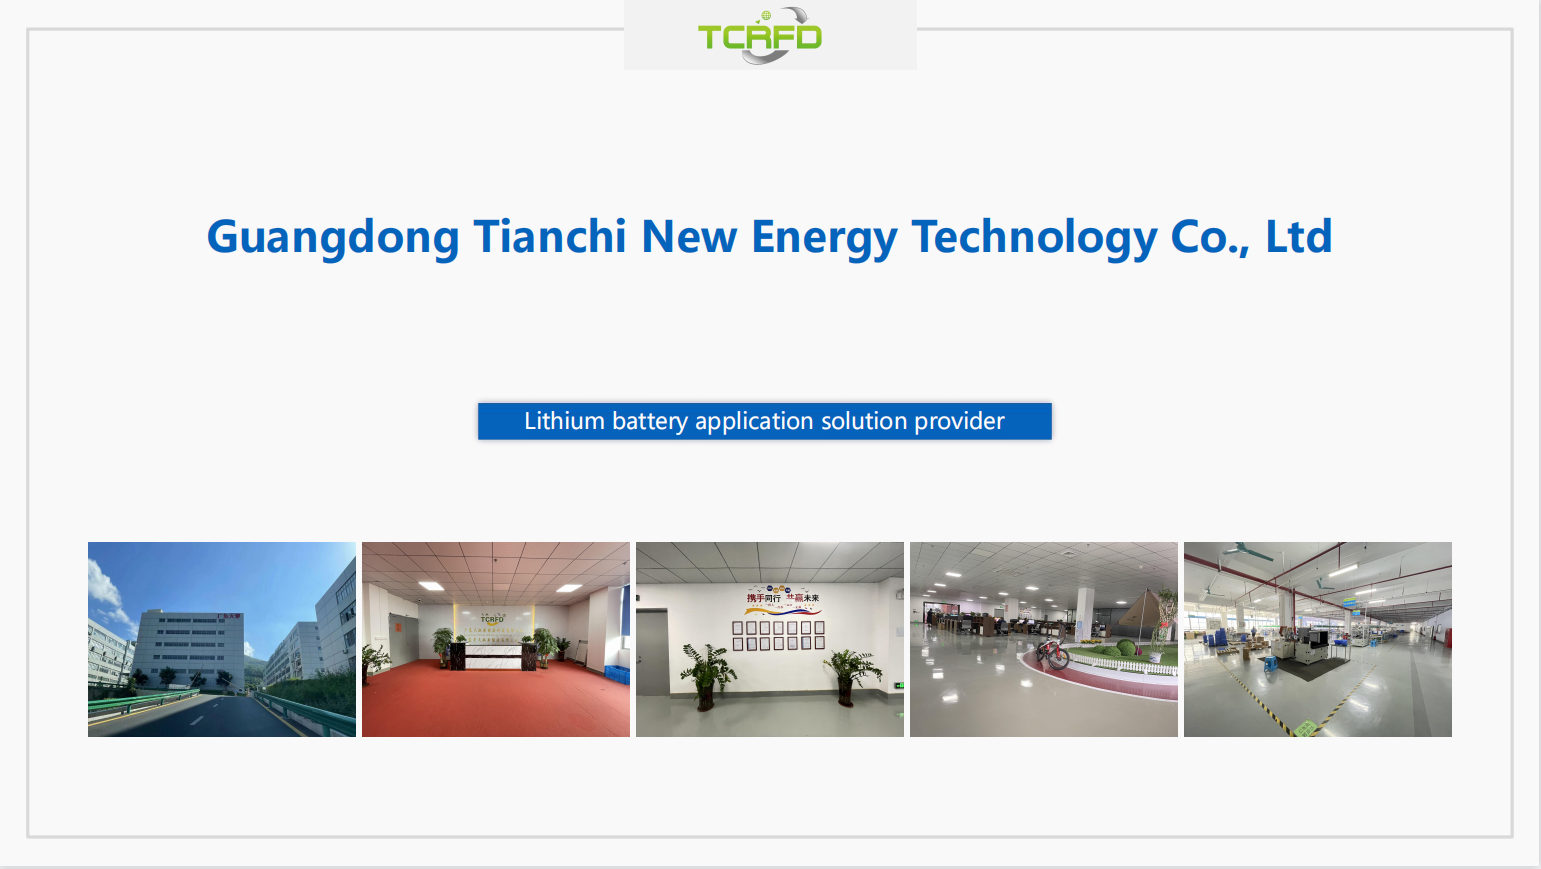 Guangdong Tianchi New Energy Technology Co., Ltd